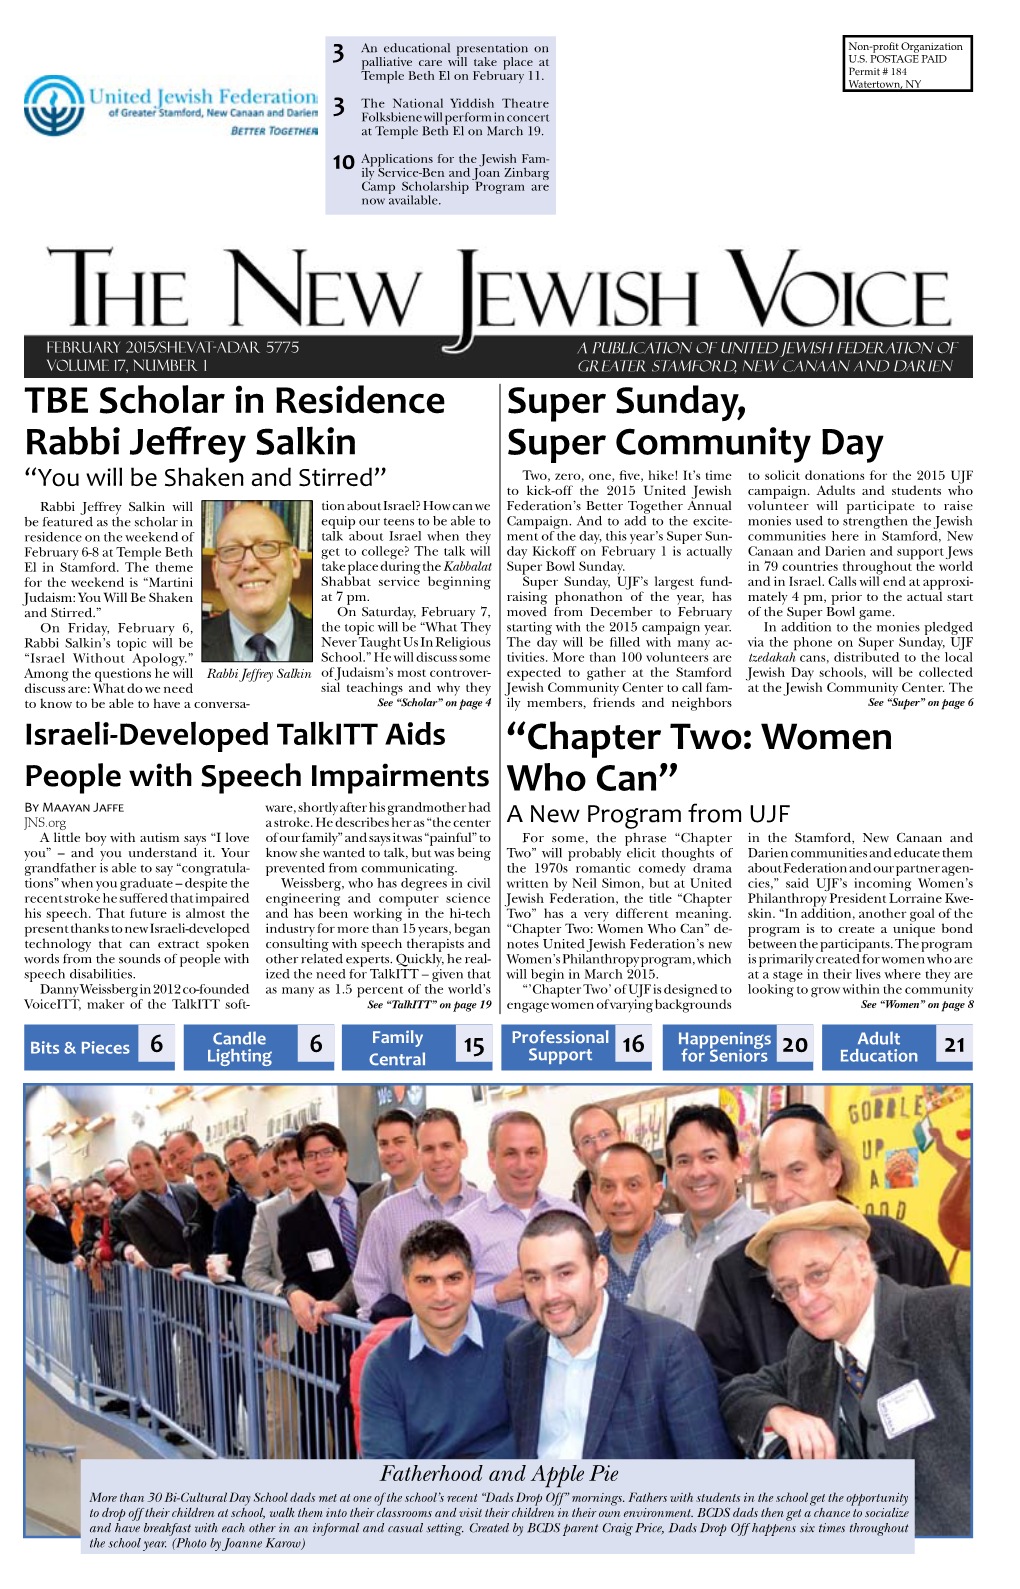 The New Jewish Voice